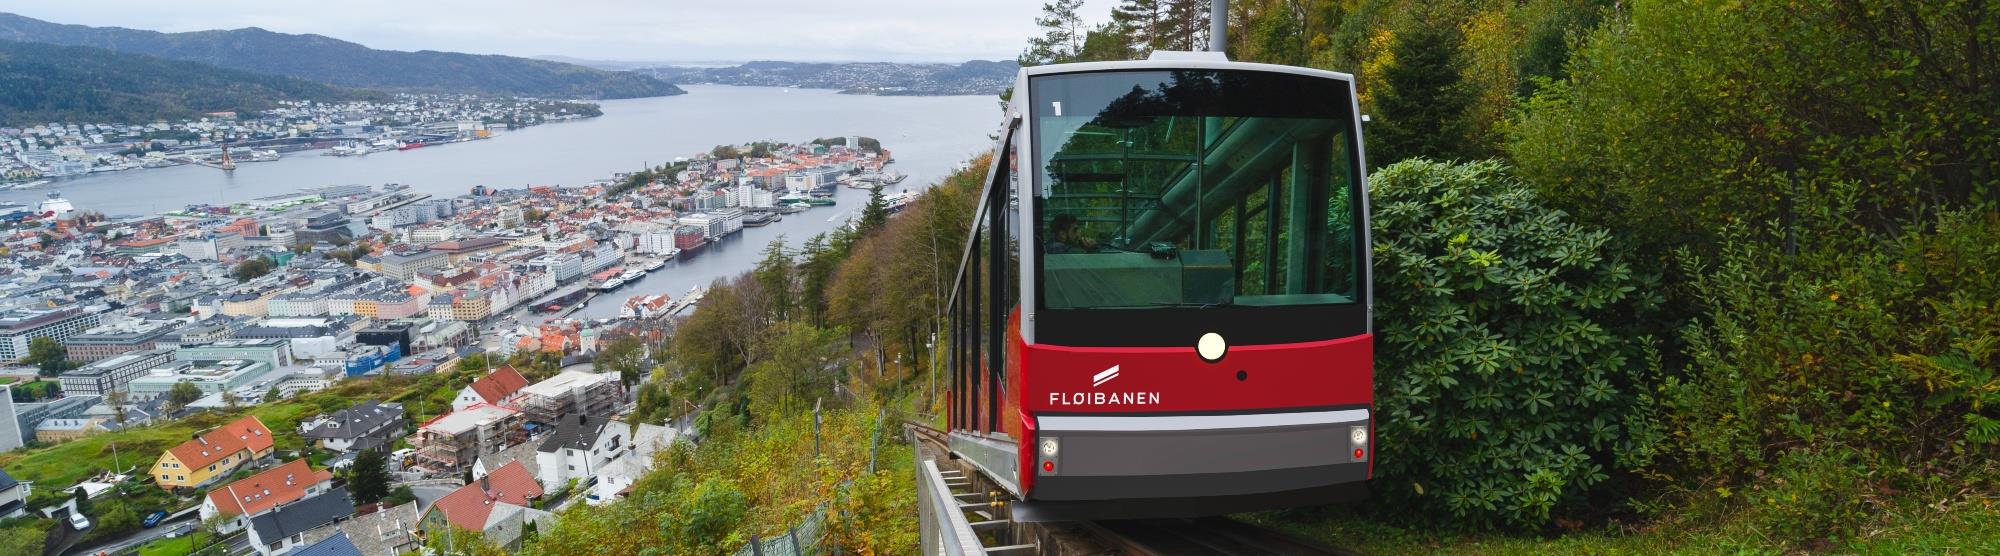 Attraksjoner i Bergen